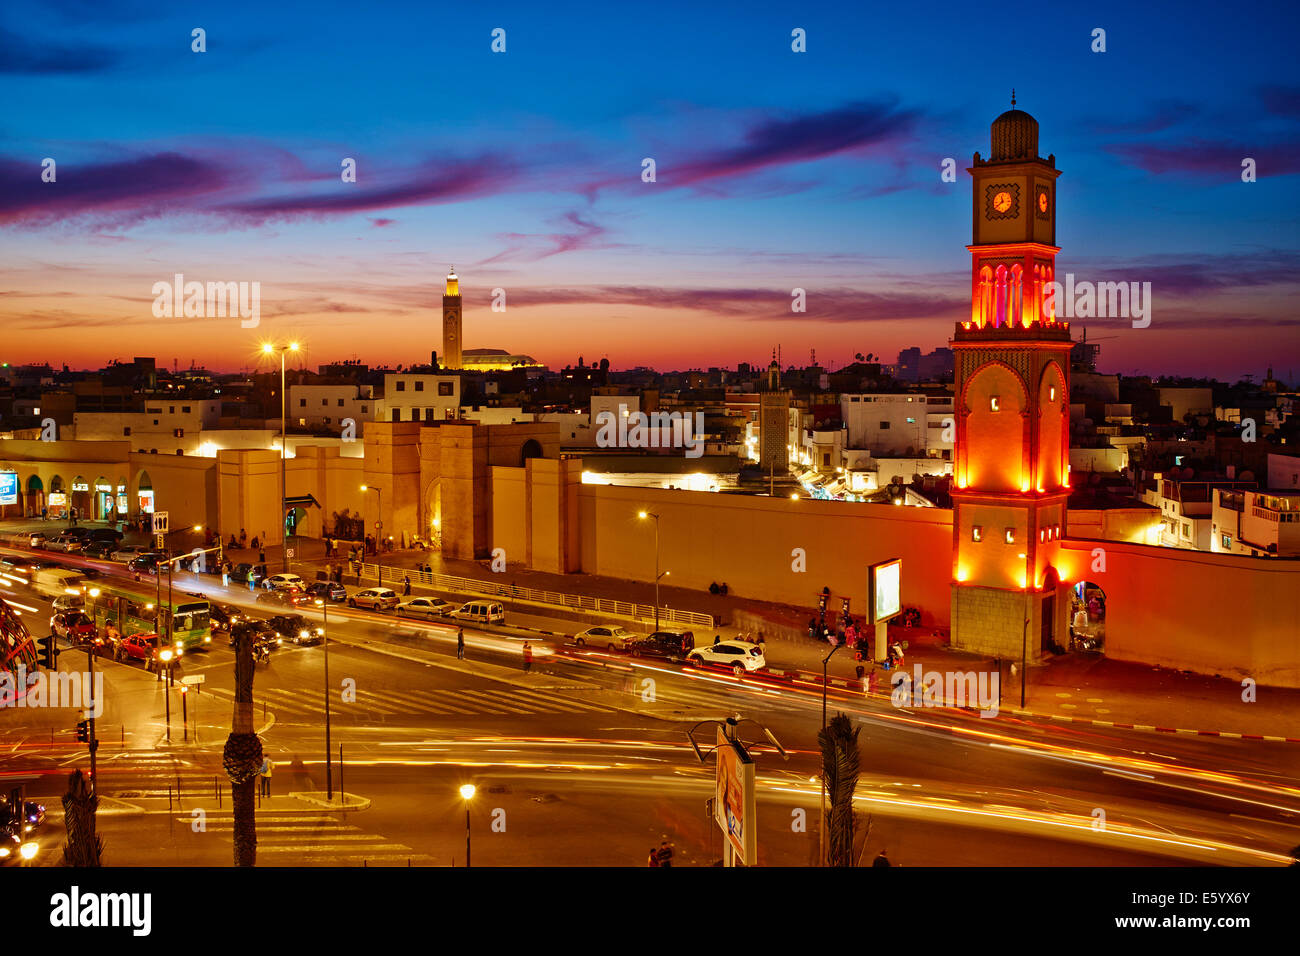 Morocco, Casablanca, Old Medina, clock Tower and Hassan II mosque Stock Photo